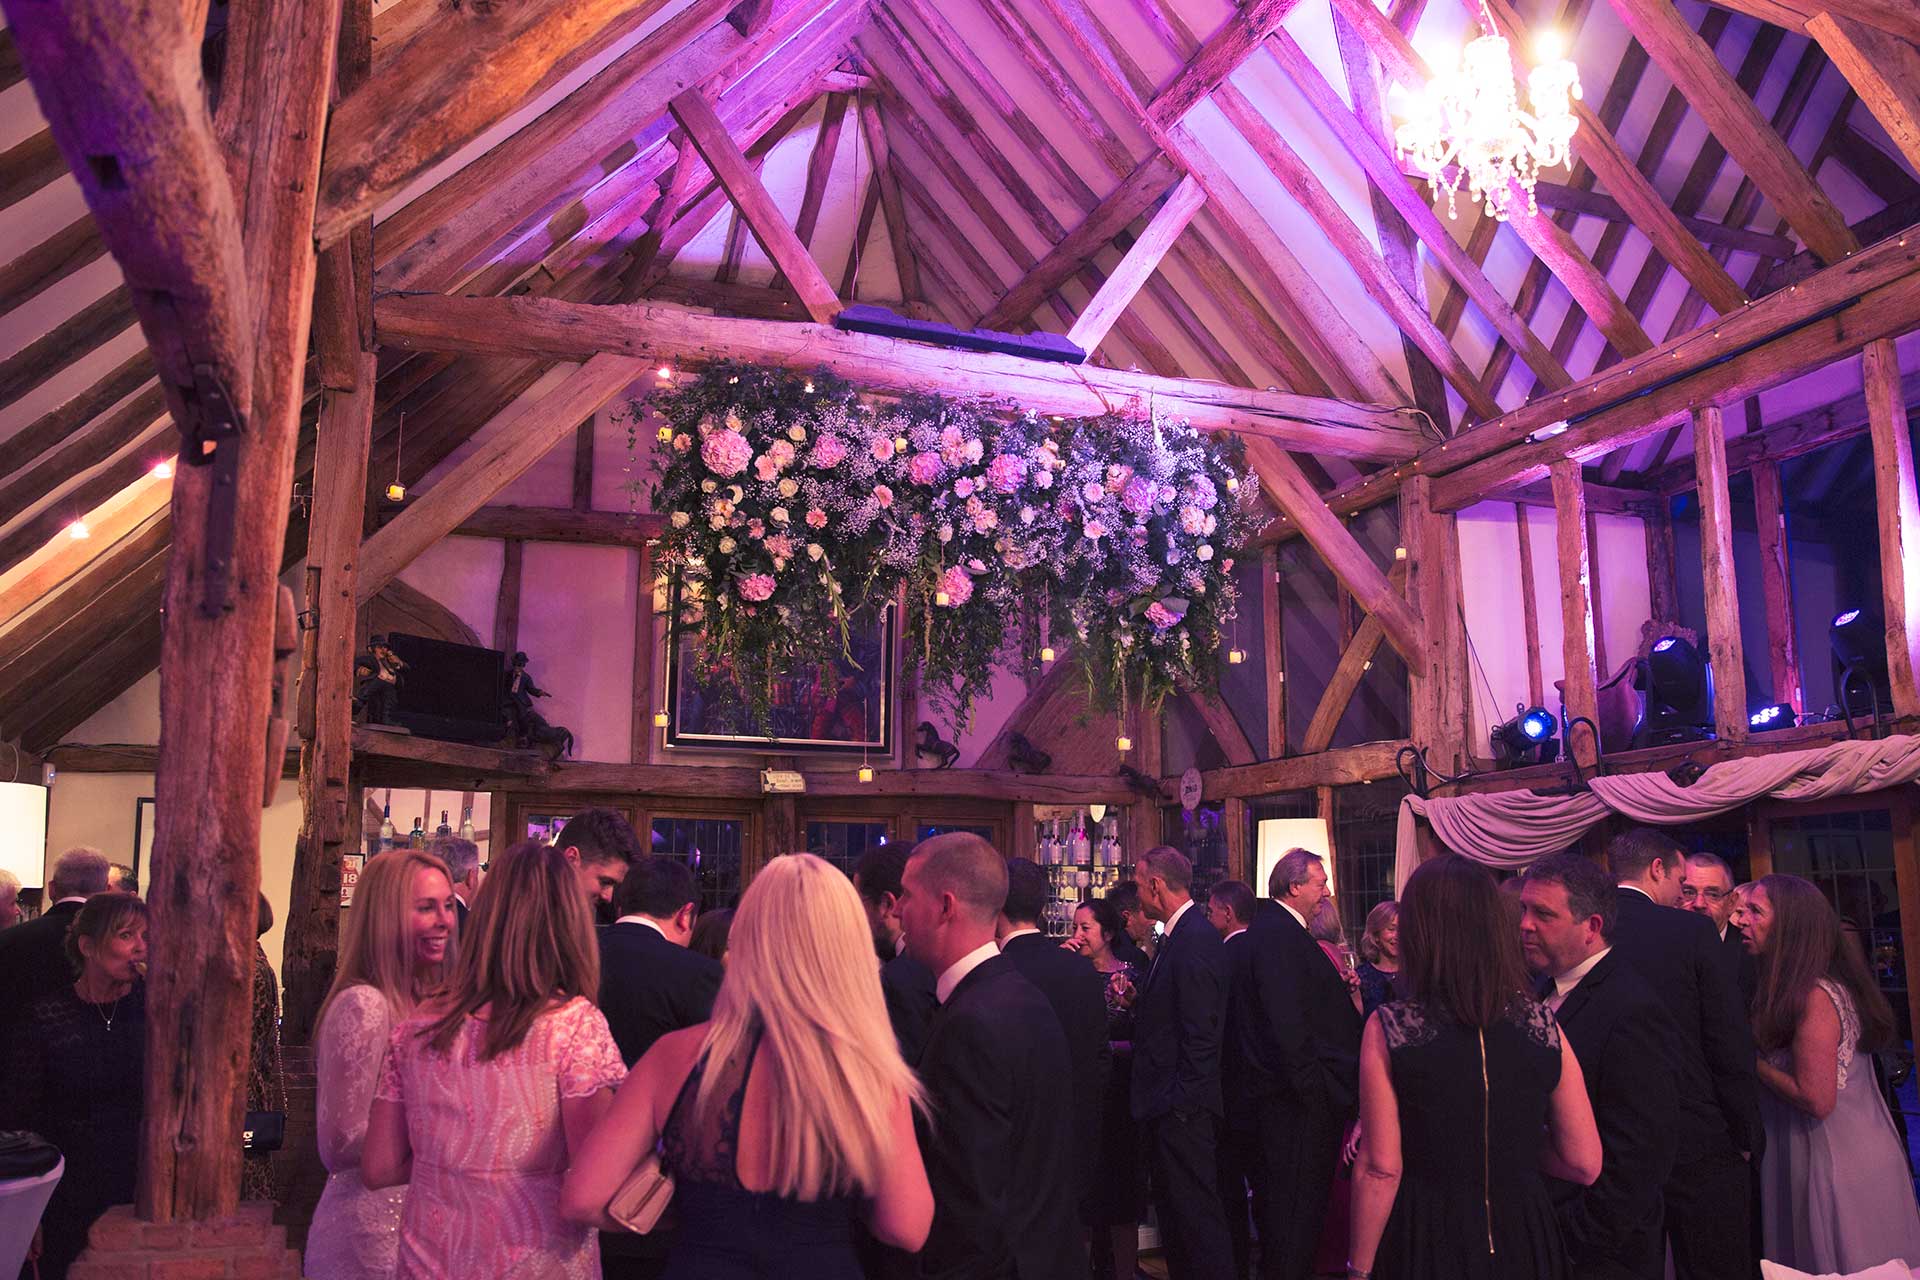 Weddings at Hurtwood Park Polo Club, Surrey - a unique, romantic venue